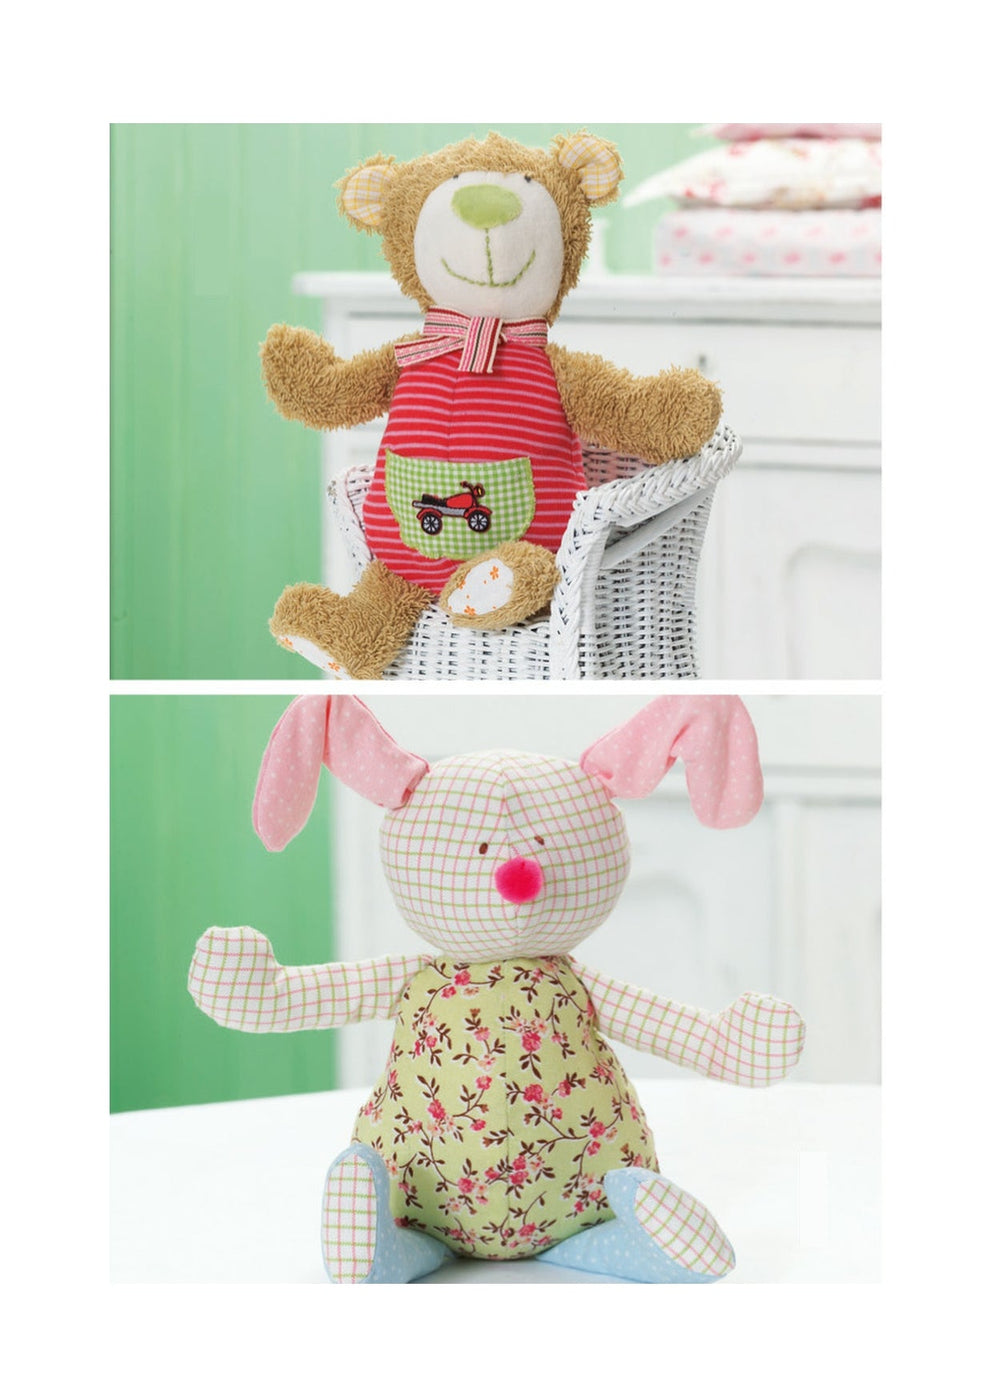 Burda 7409 Stuffed Rabbit and Bear Pattern | Easy from Jaycotts Sewing Supplies